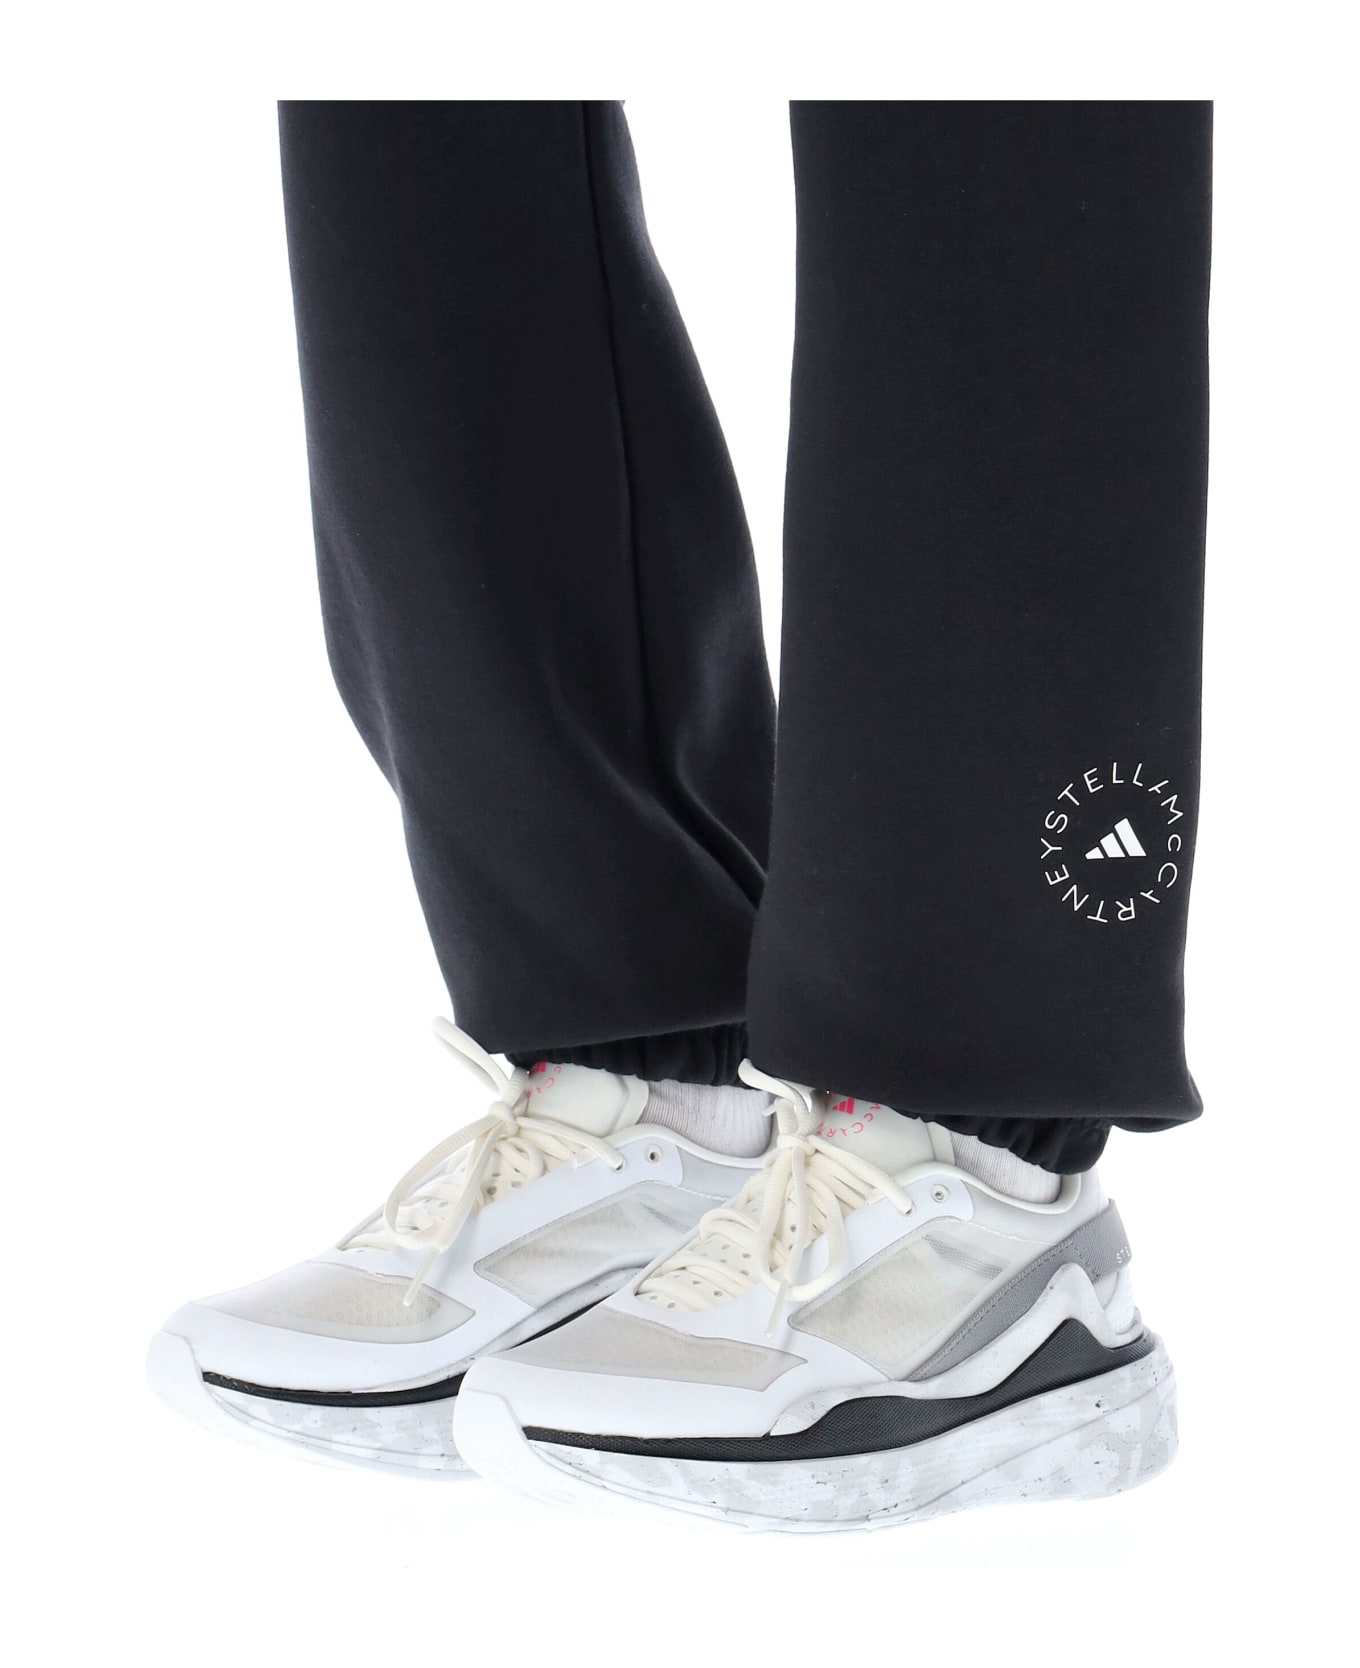 Adidas by Stella McCartney Sweat Tracksuit Bottoms - Black/white スウェットパンツ